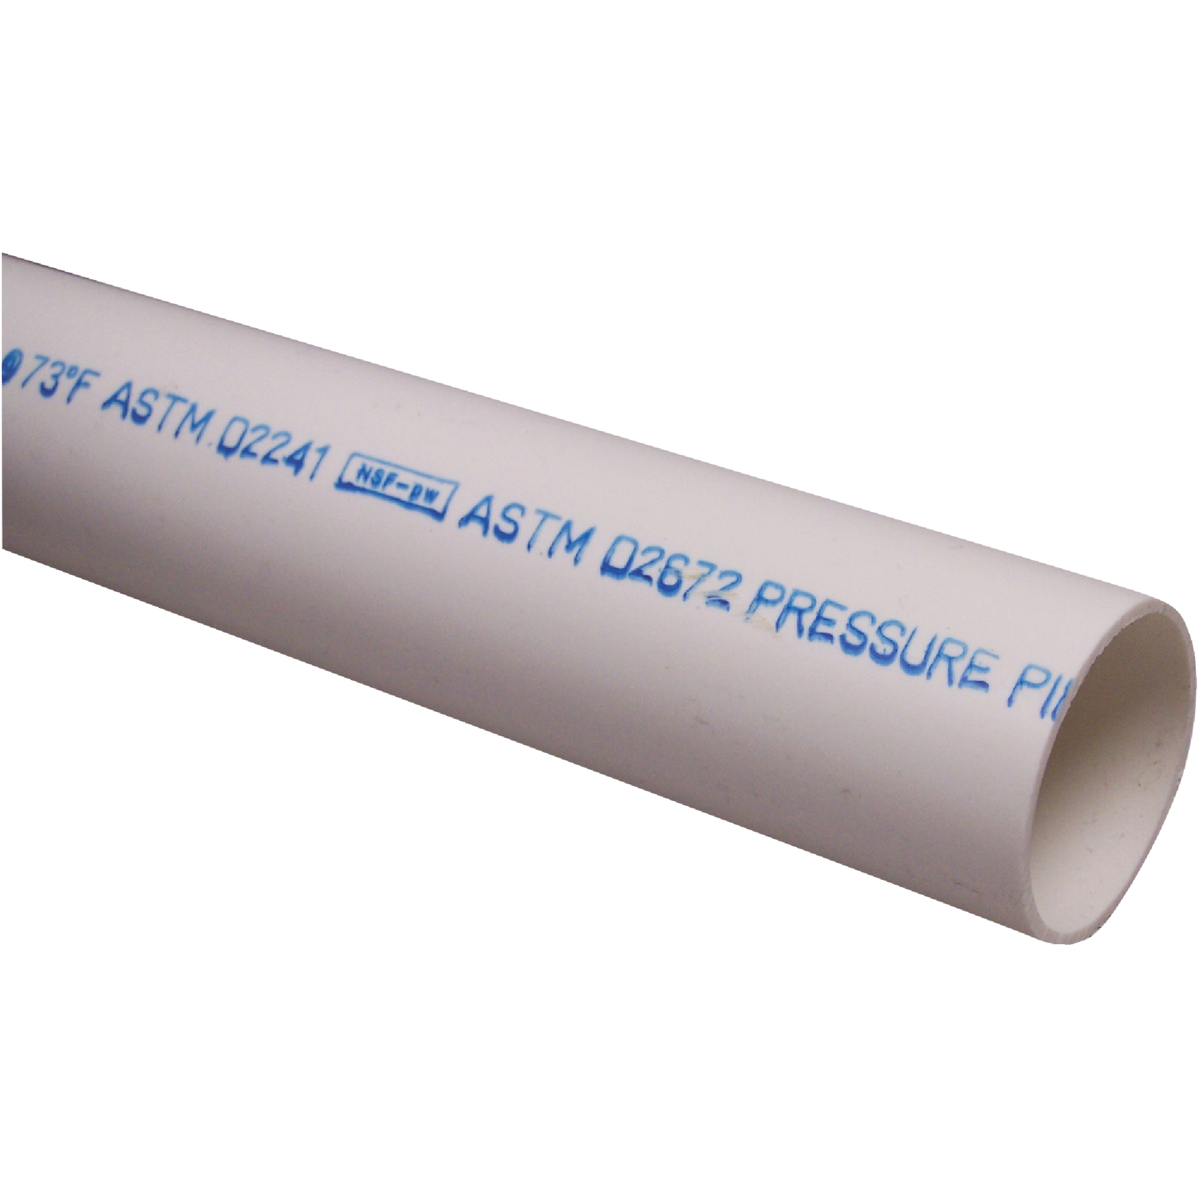 PVC Pressure Pipe